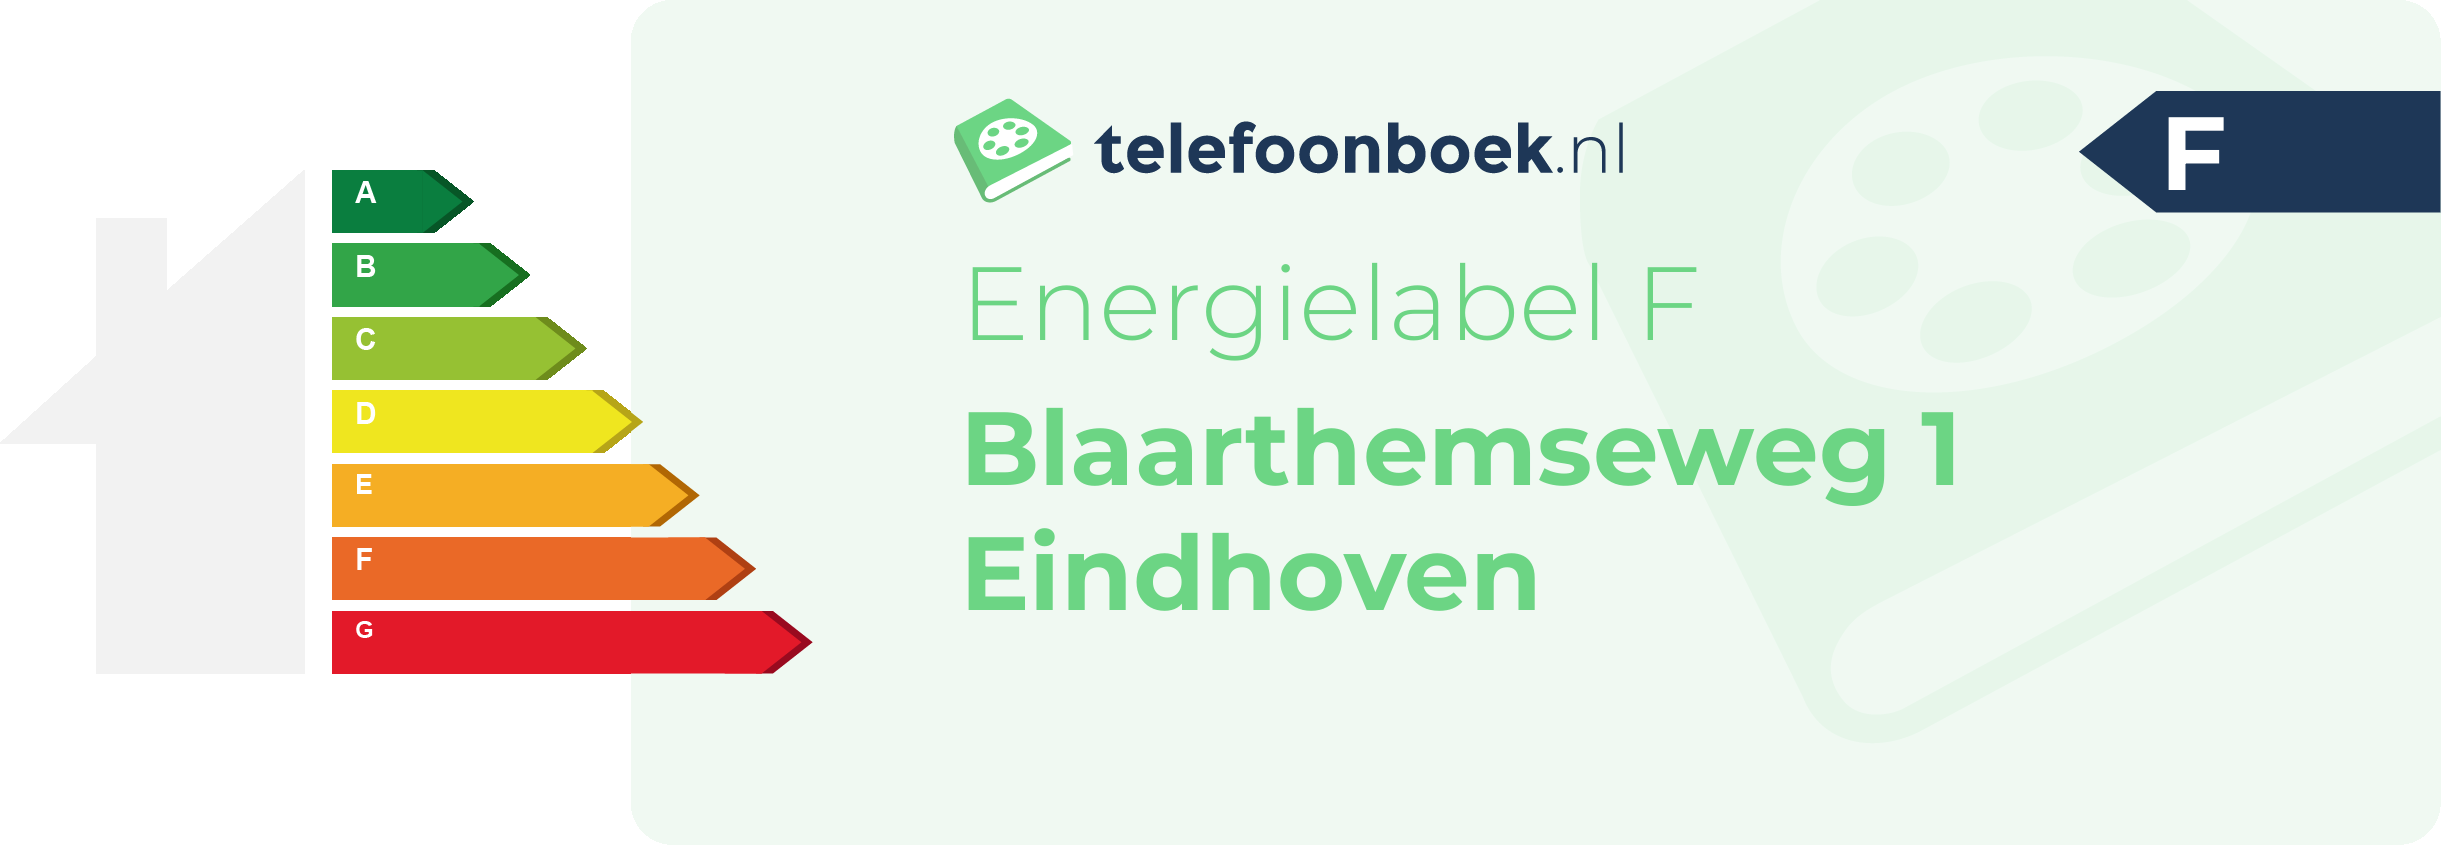 Energielabel Blaarthemseweg 1 Eindhoven